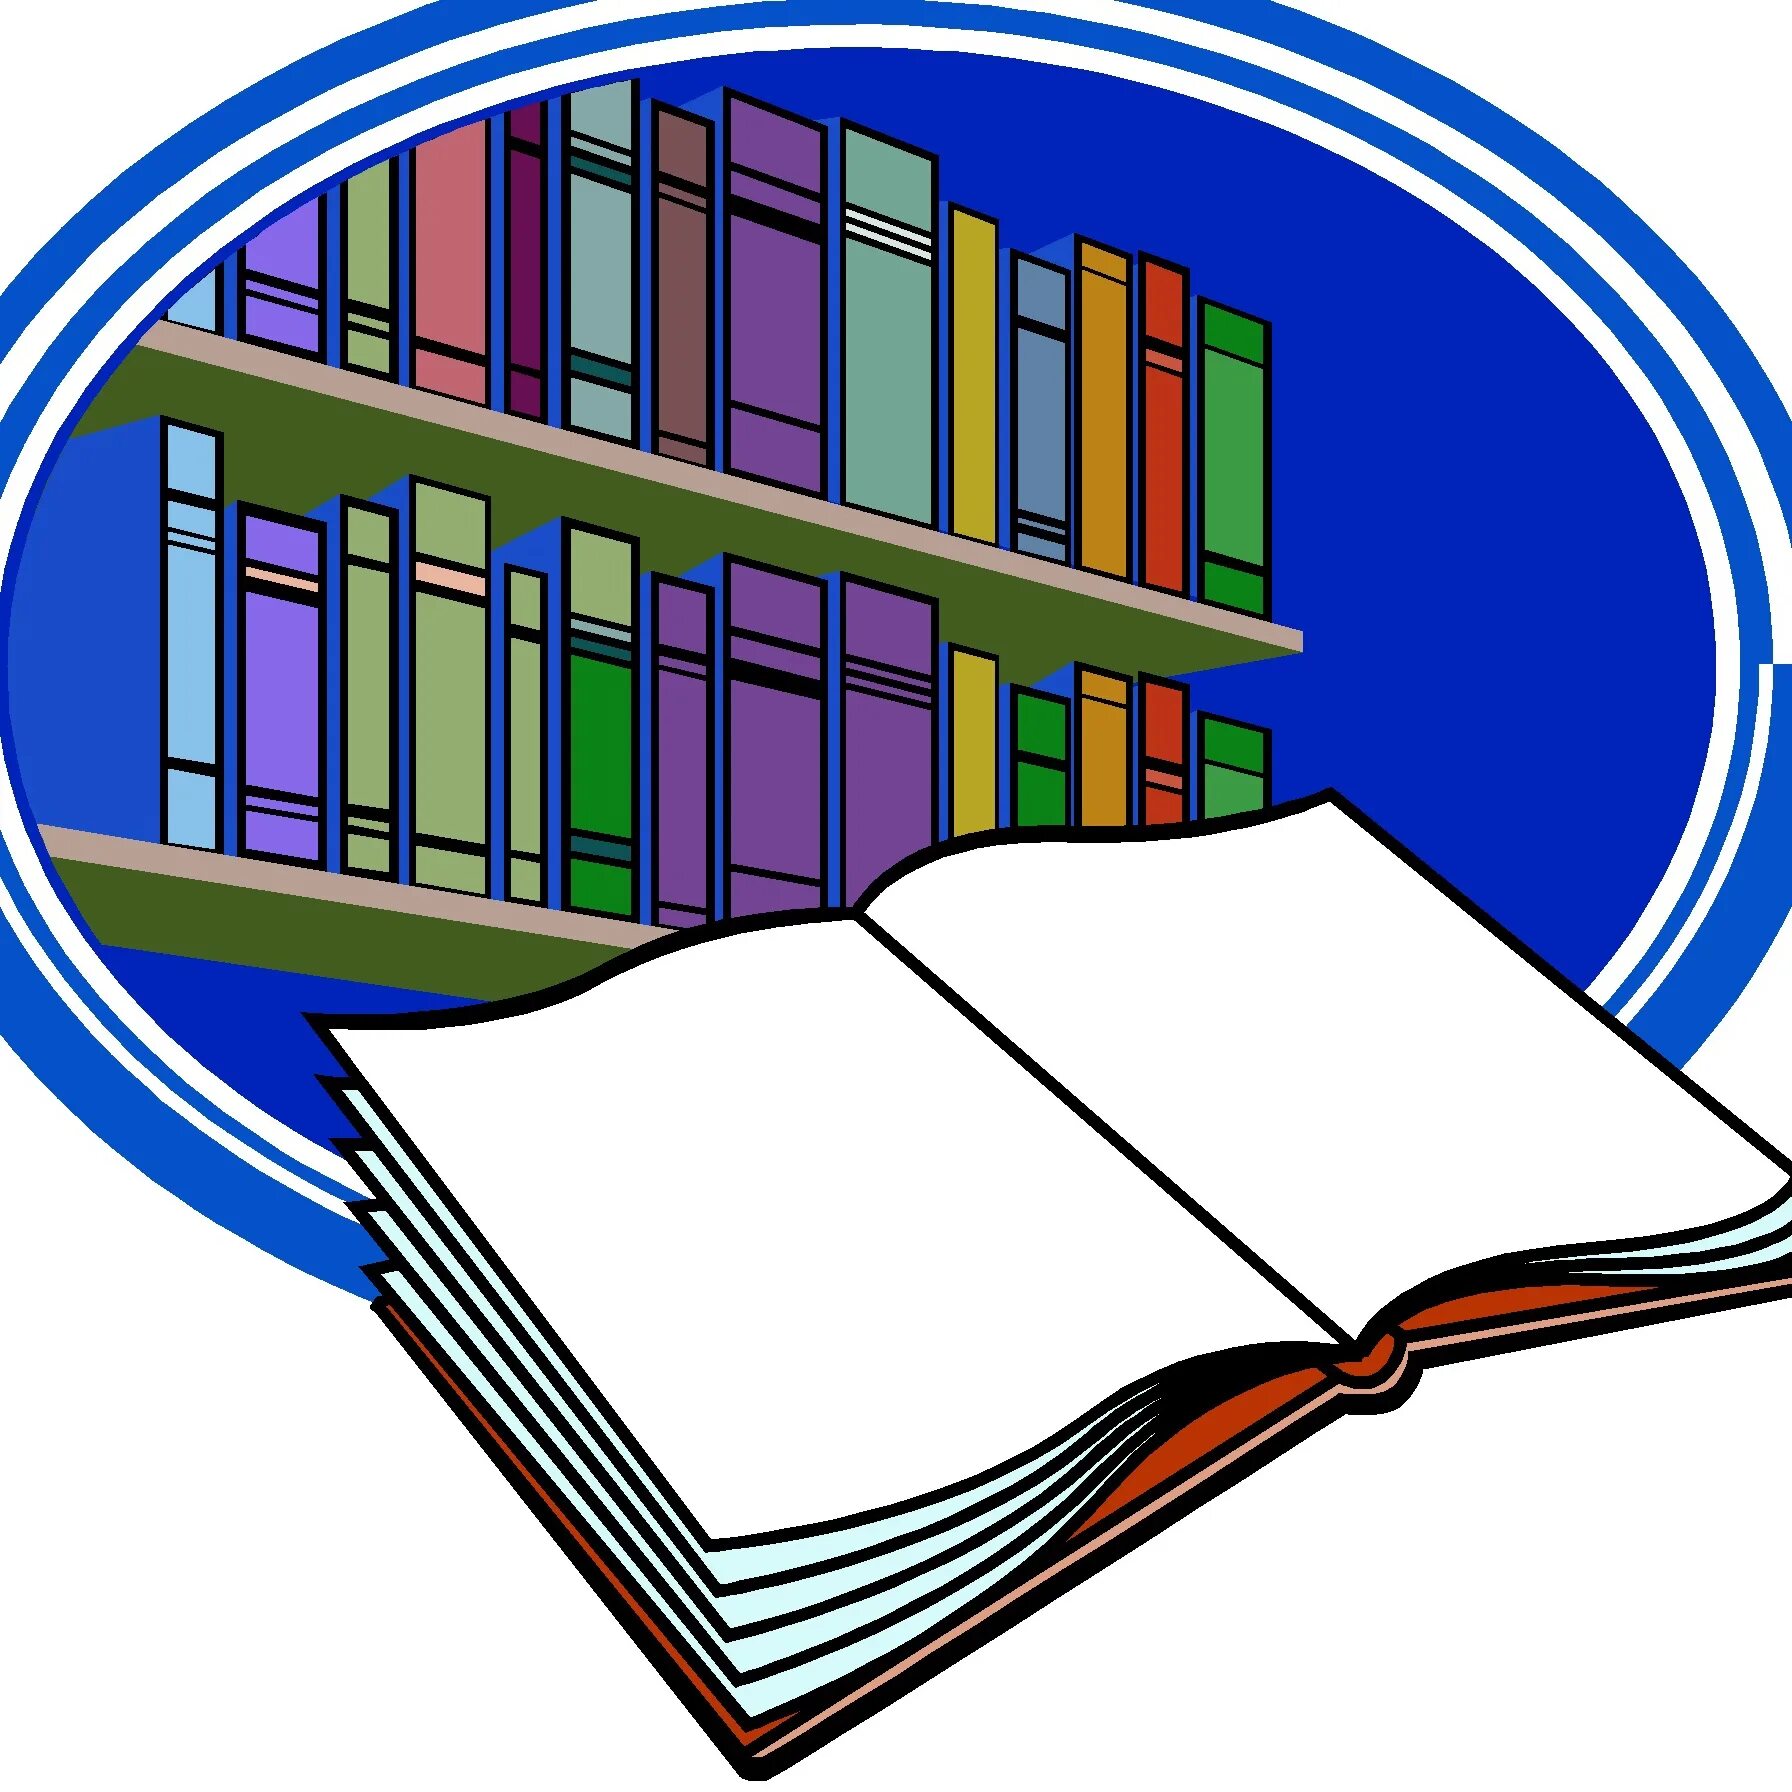 Сайт библиотеки информация. Логотип библиотеки. Библиотека картинки. Библиотека иллюстрация. Логотип школьной библиотеки.